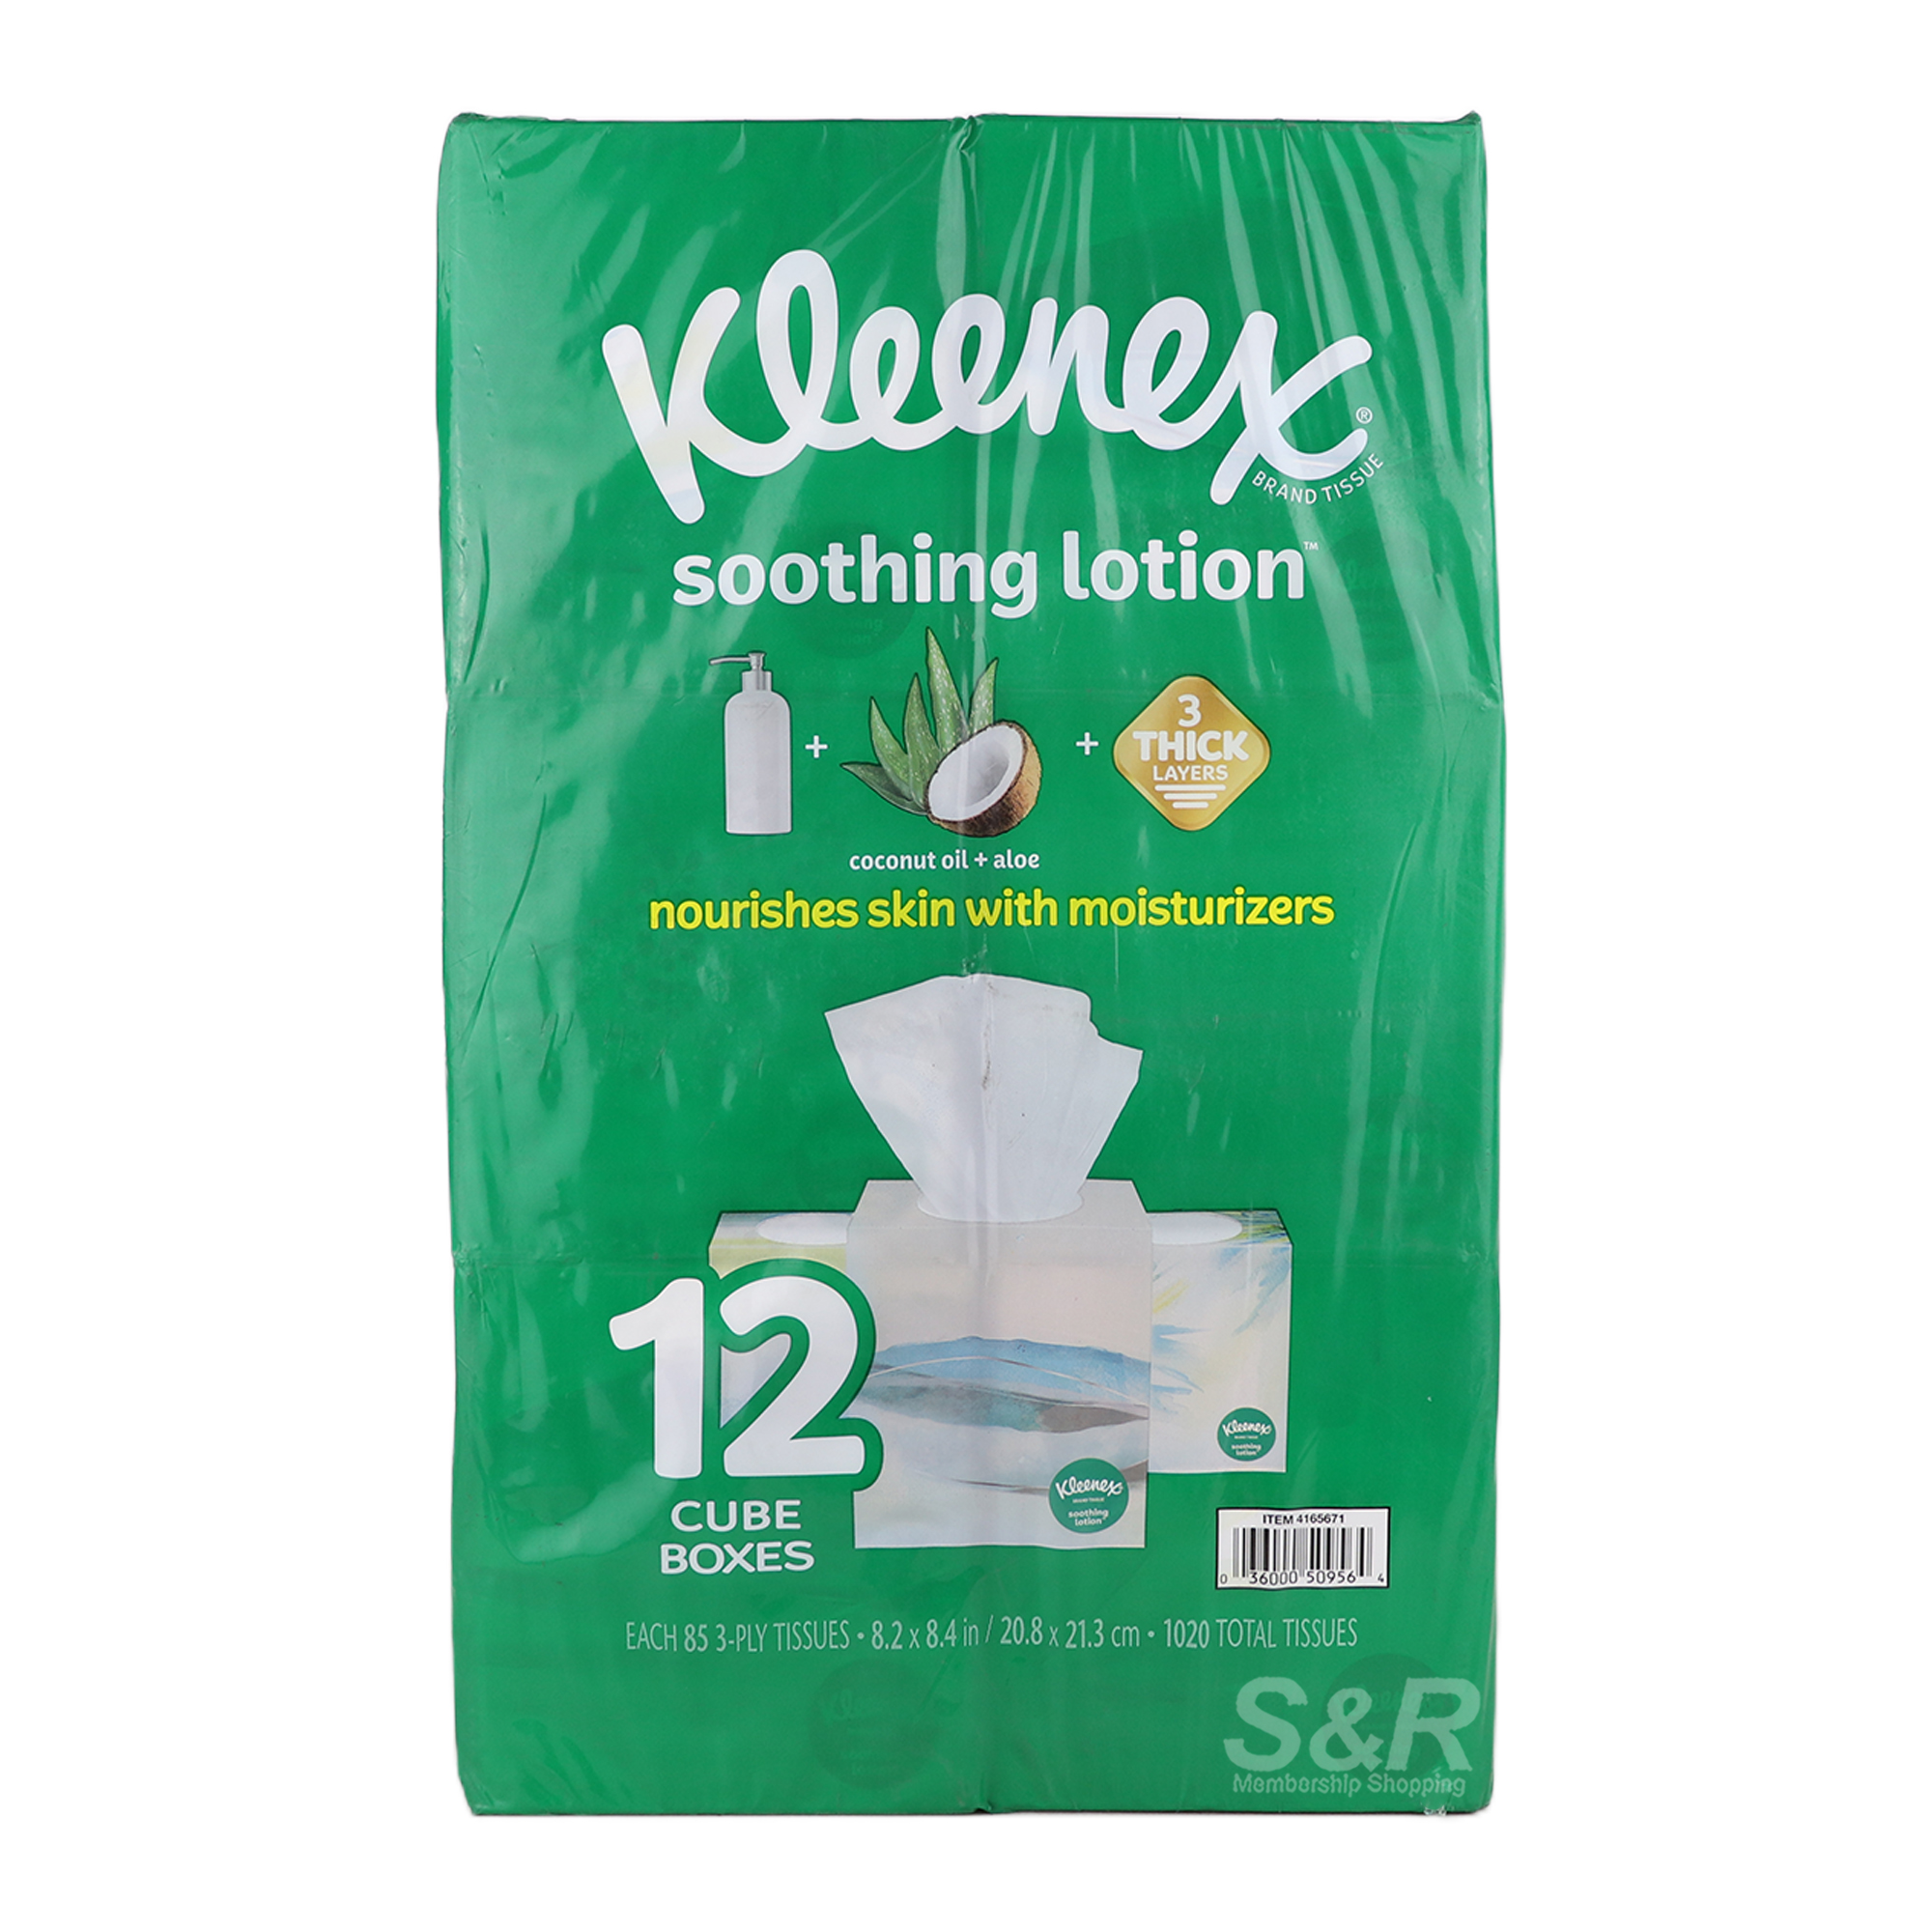 Kleenex 85-3 Ply Tissues 12 Cube Boxes